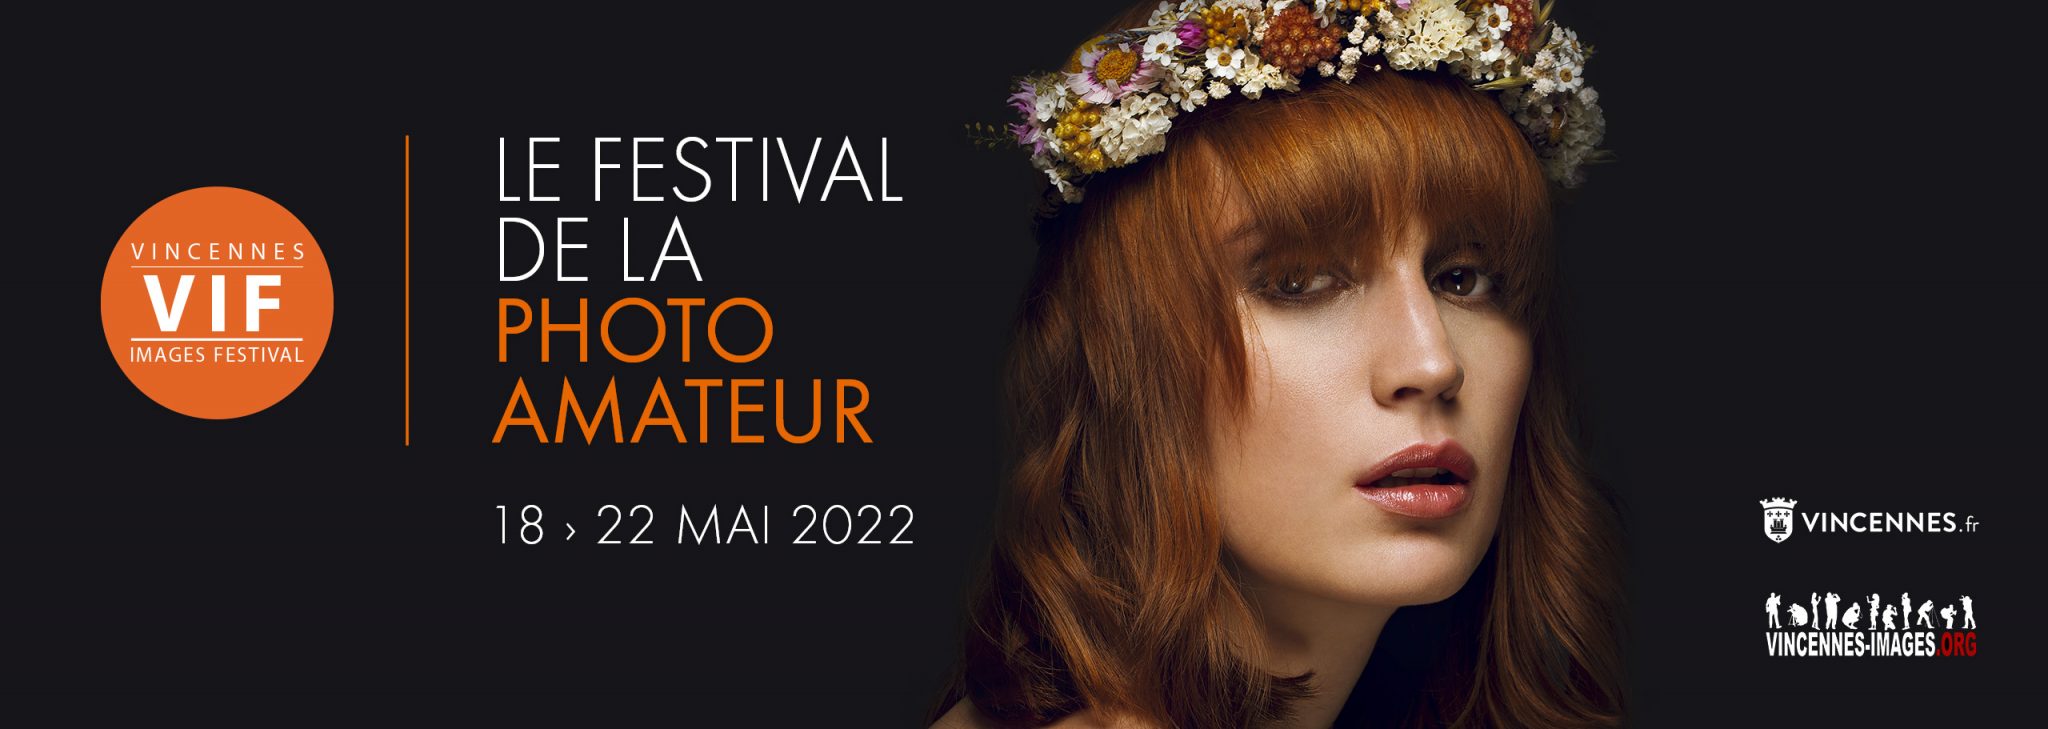 Vincennes Images Festival 2022